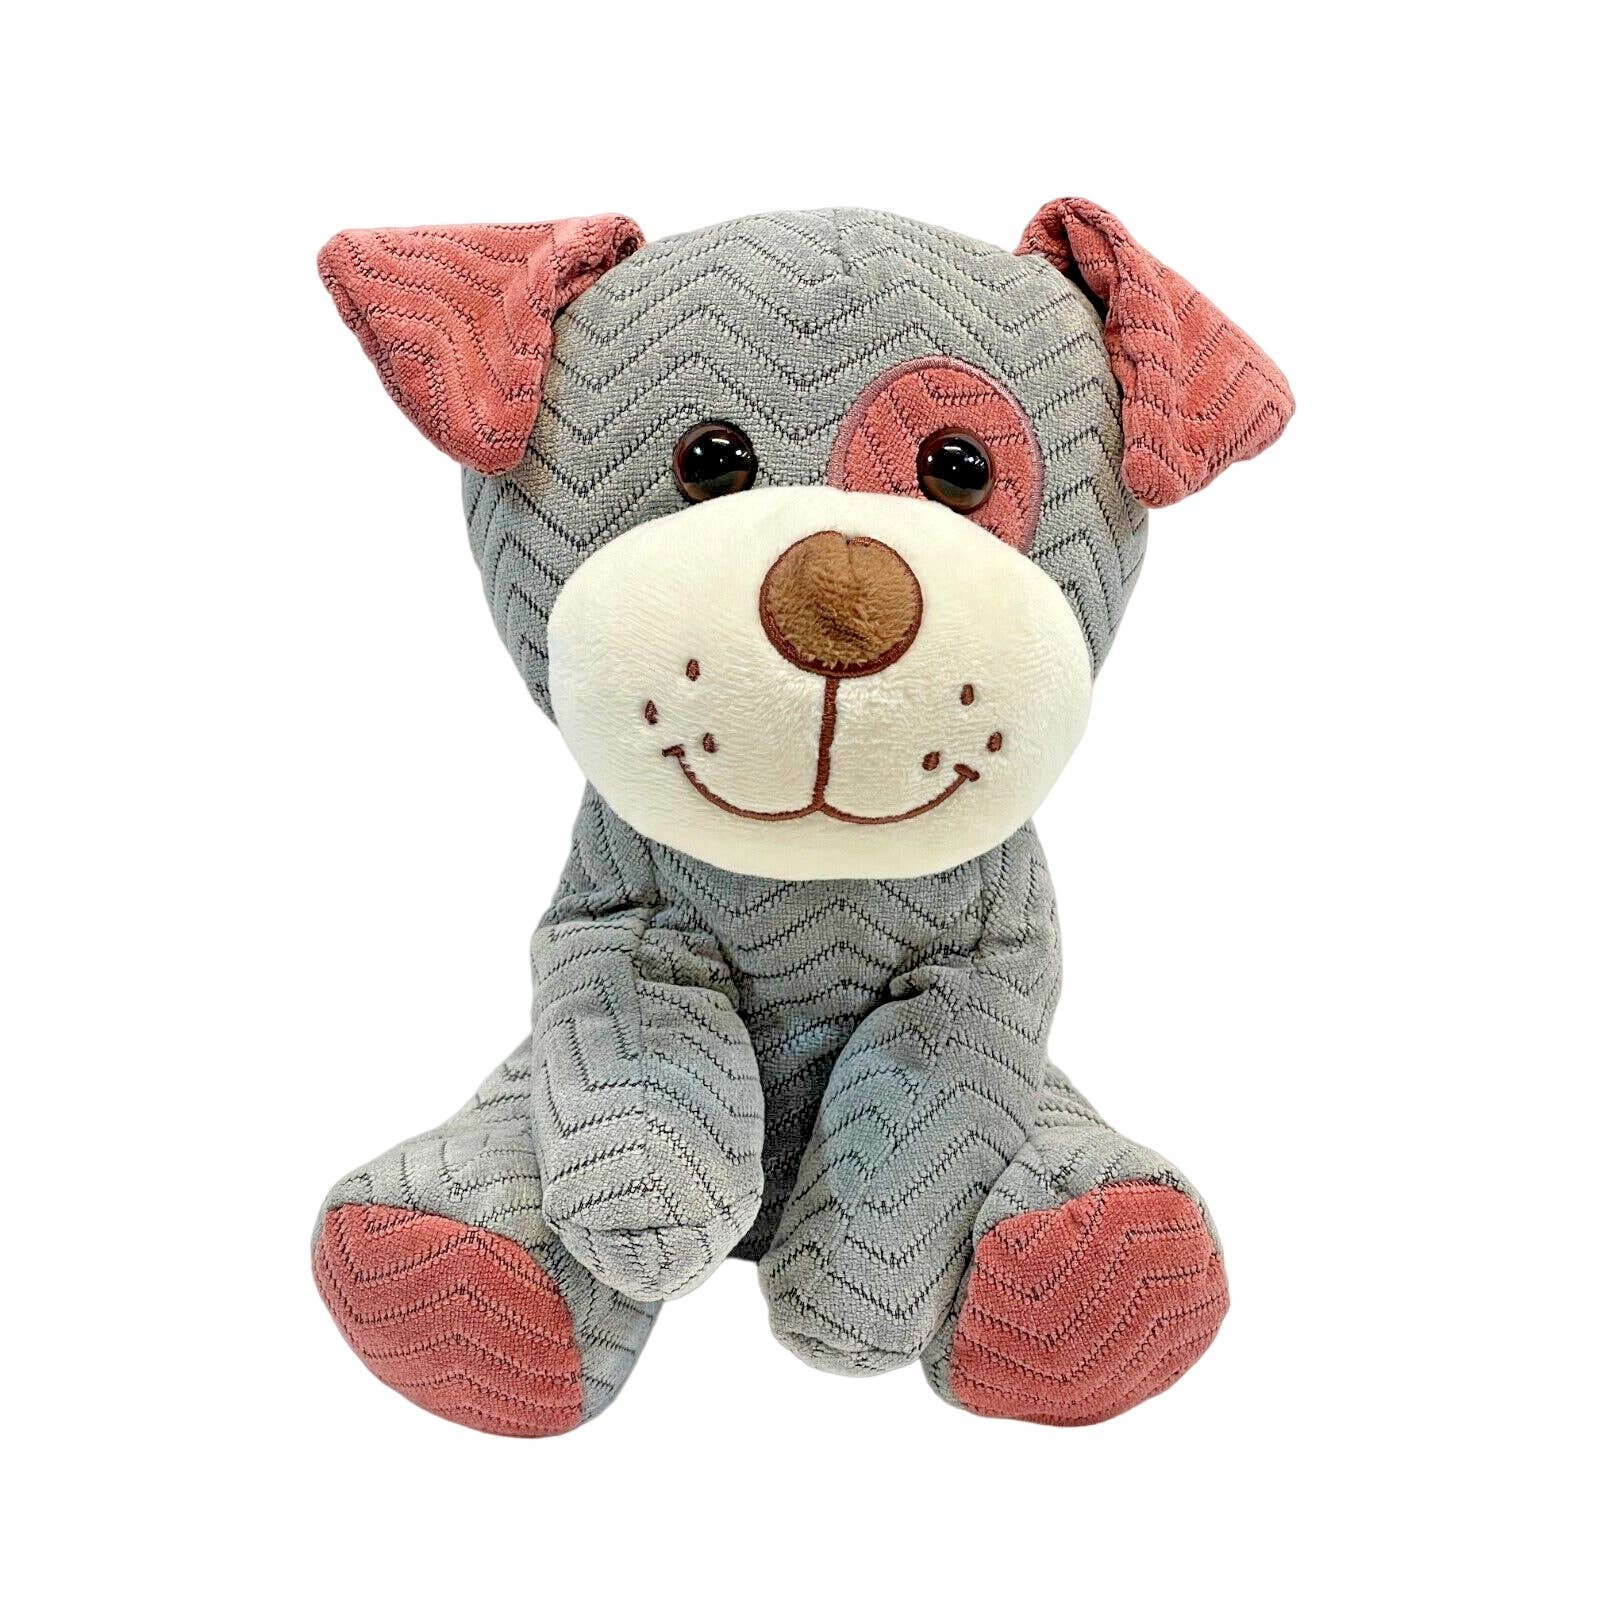 Hug Fun Dog Plush 8 Inch Gray Ribbed Chevron Pink Ears Puppy Stuffed Animal Toy - $18.25